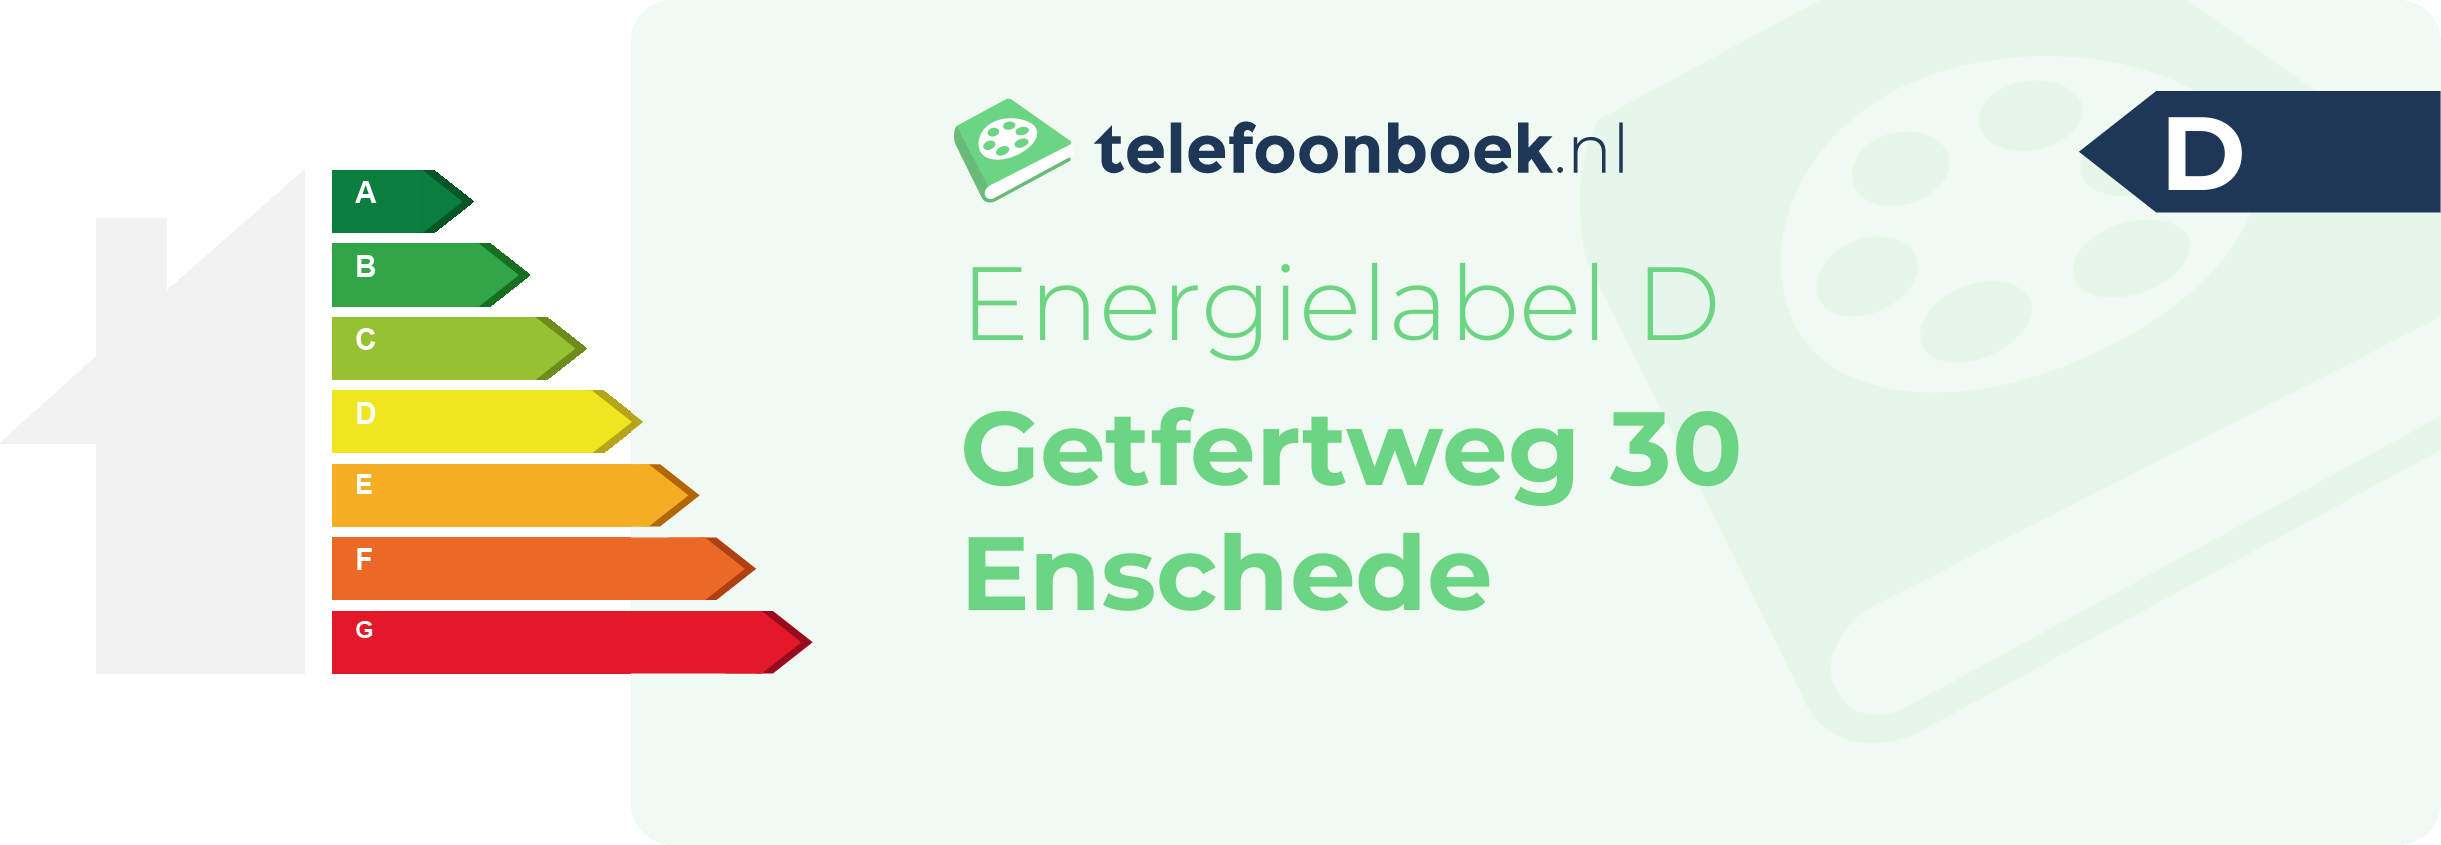 Energielabel Getfertweg 30 Enschede